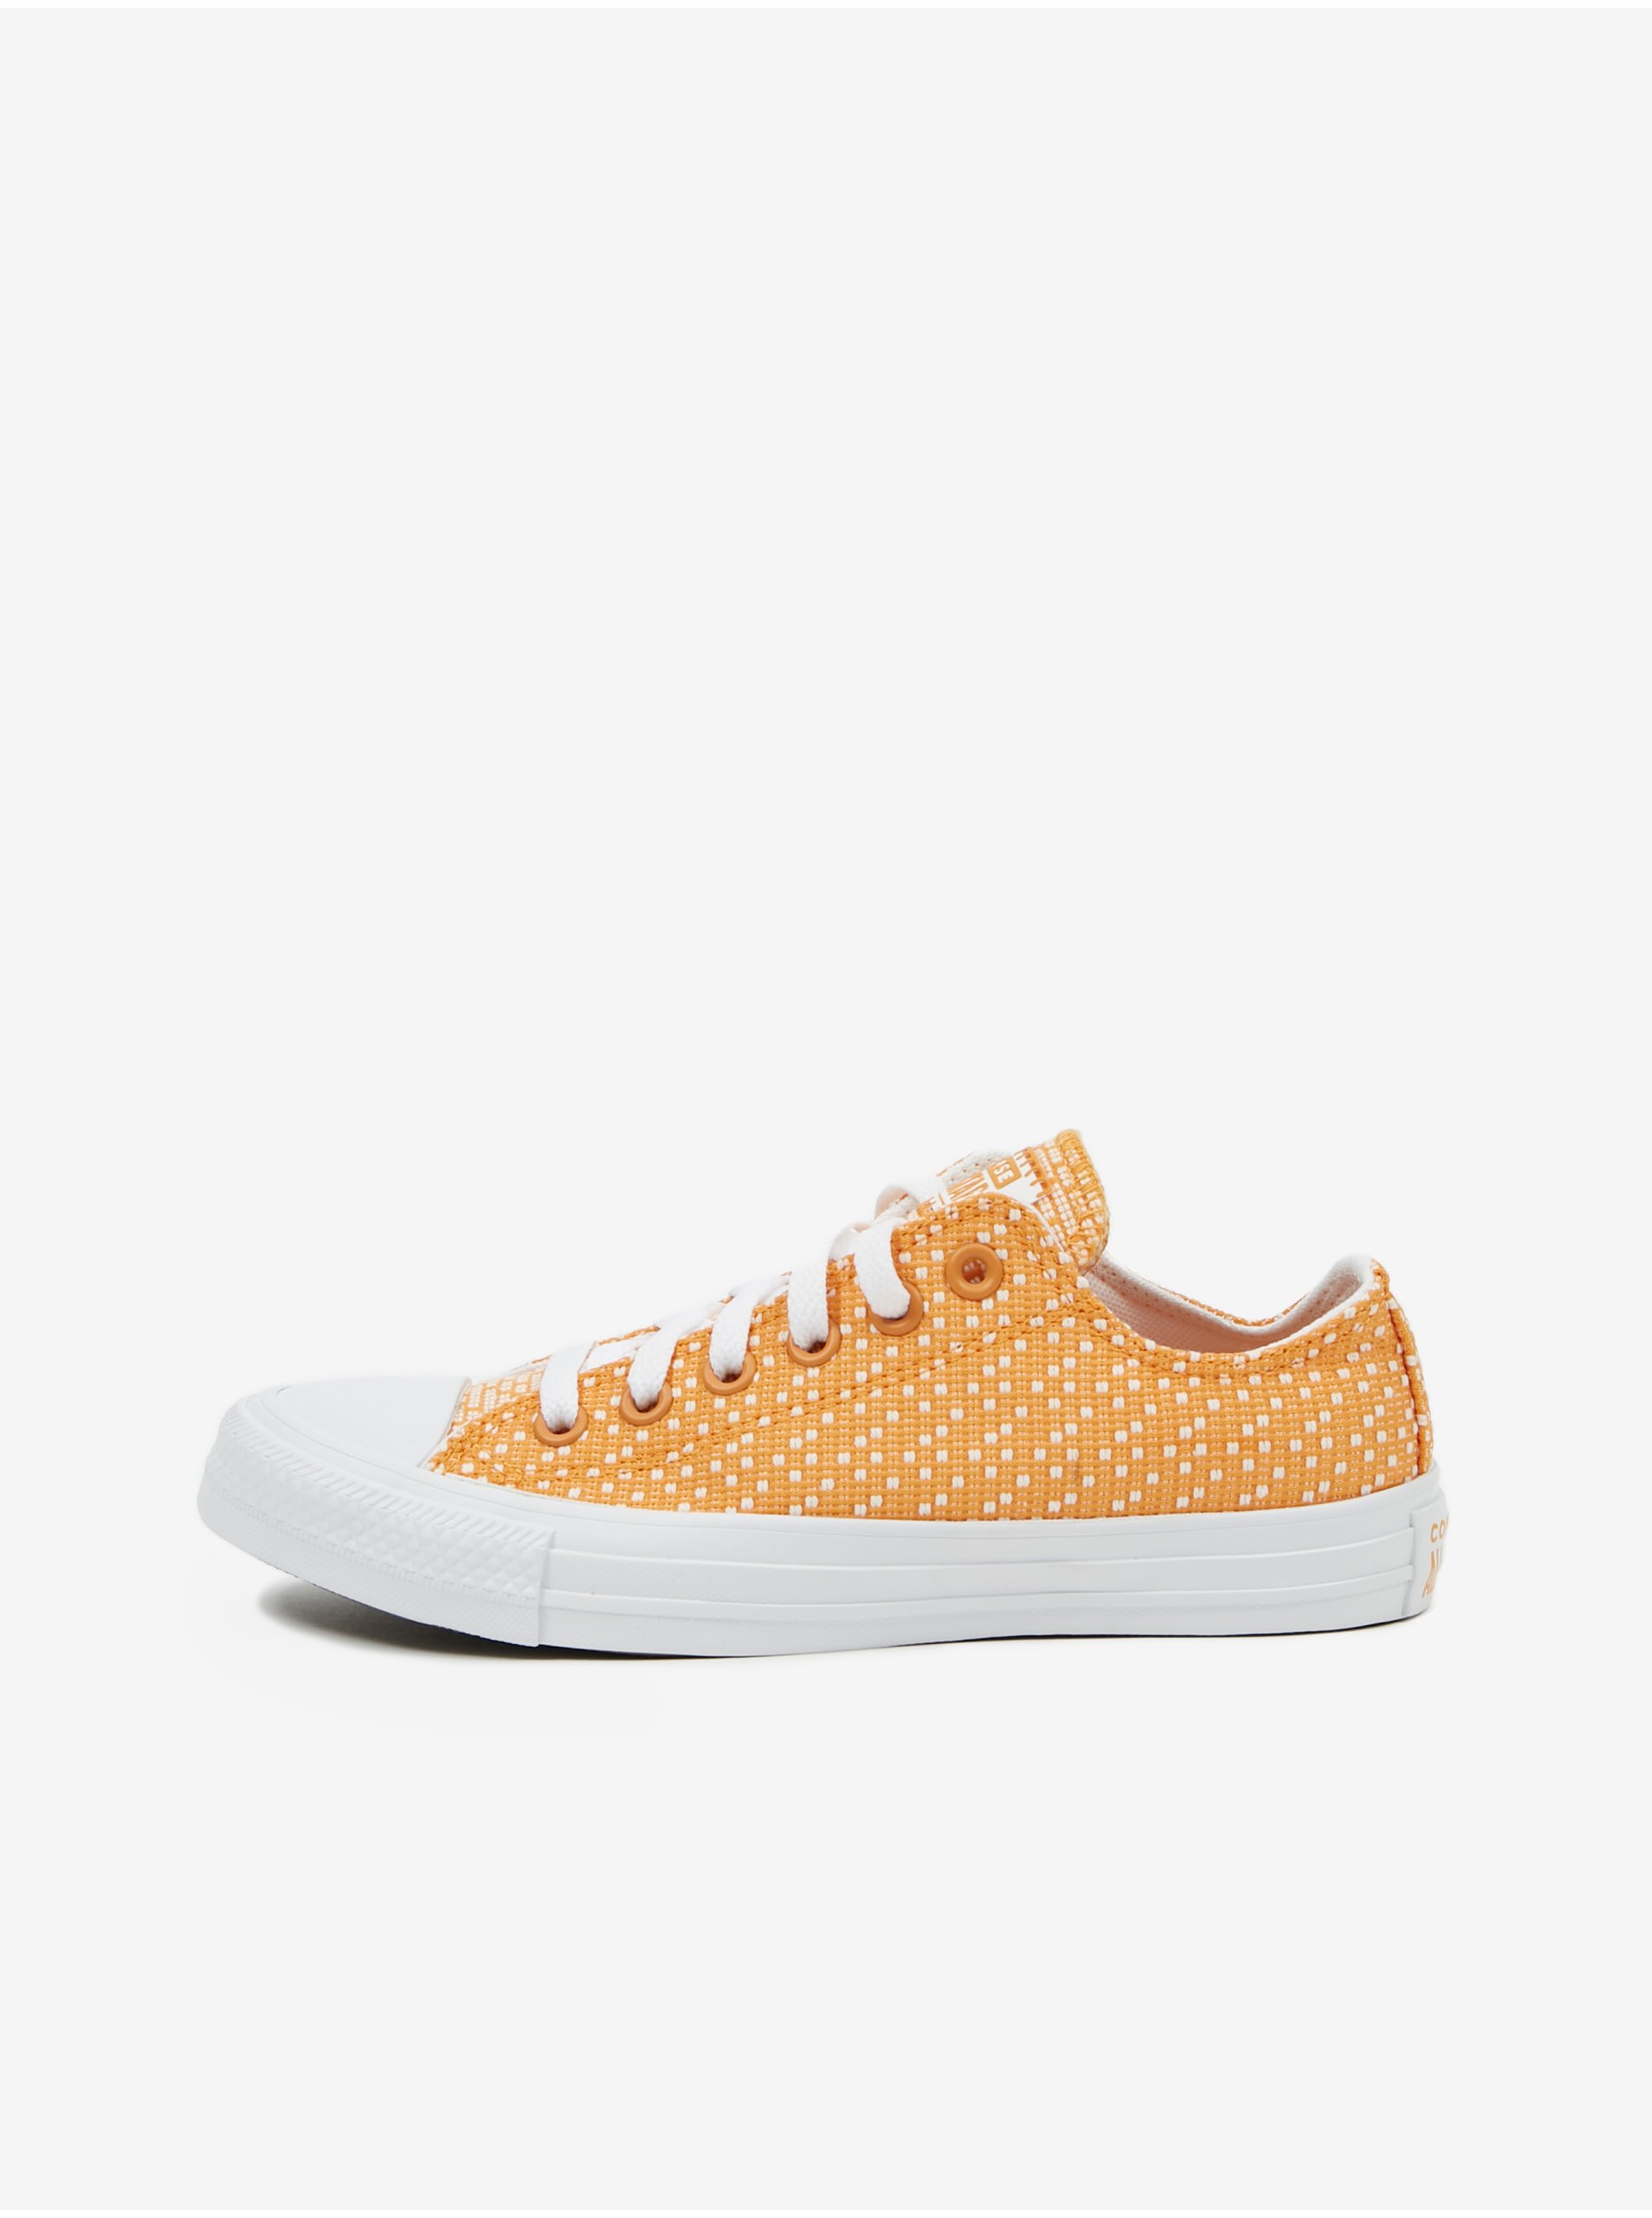 Orange Women's Converse Reverse Stitched Sneakers - Women